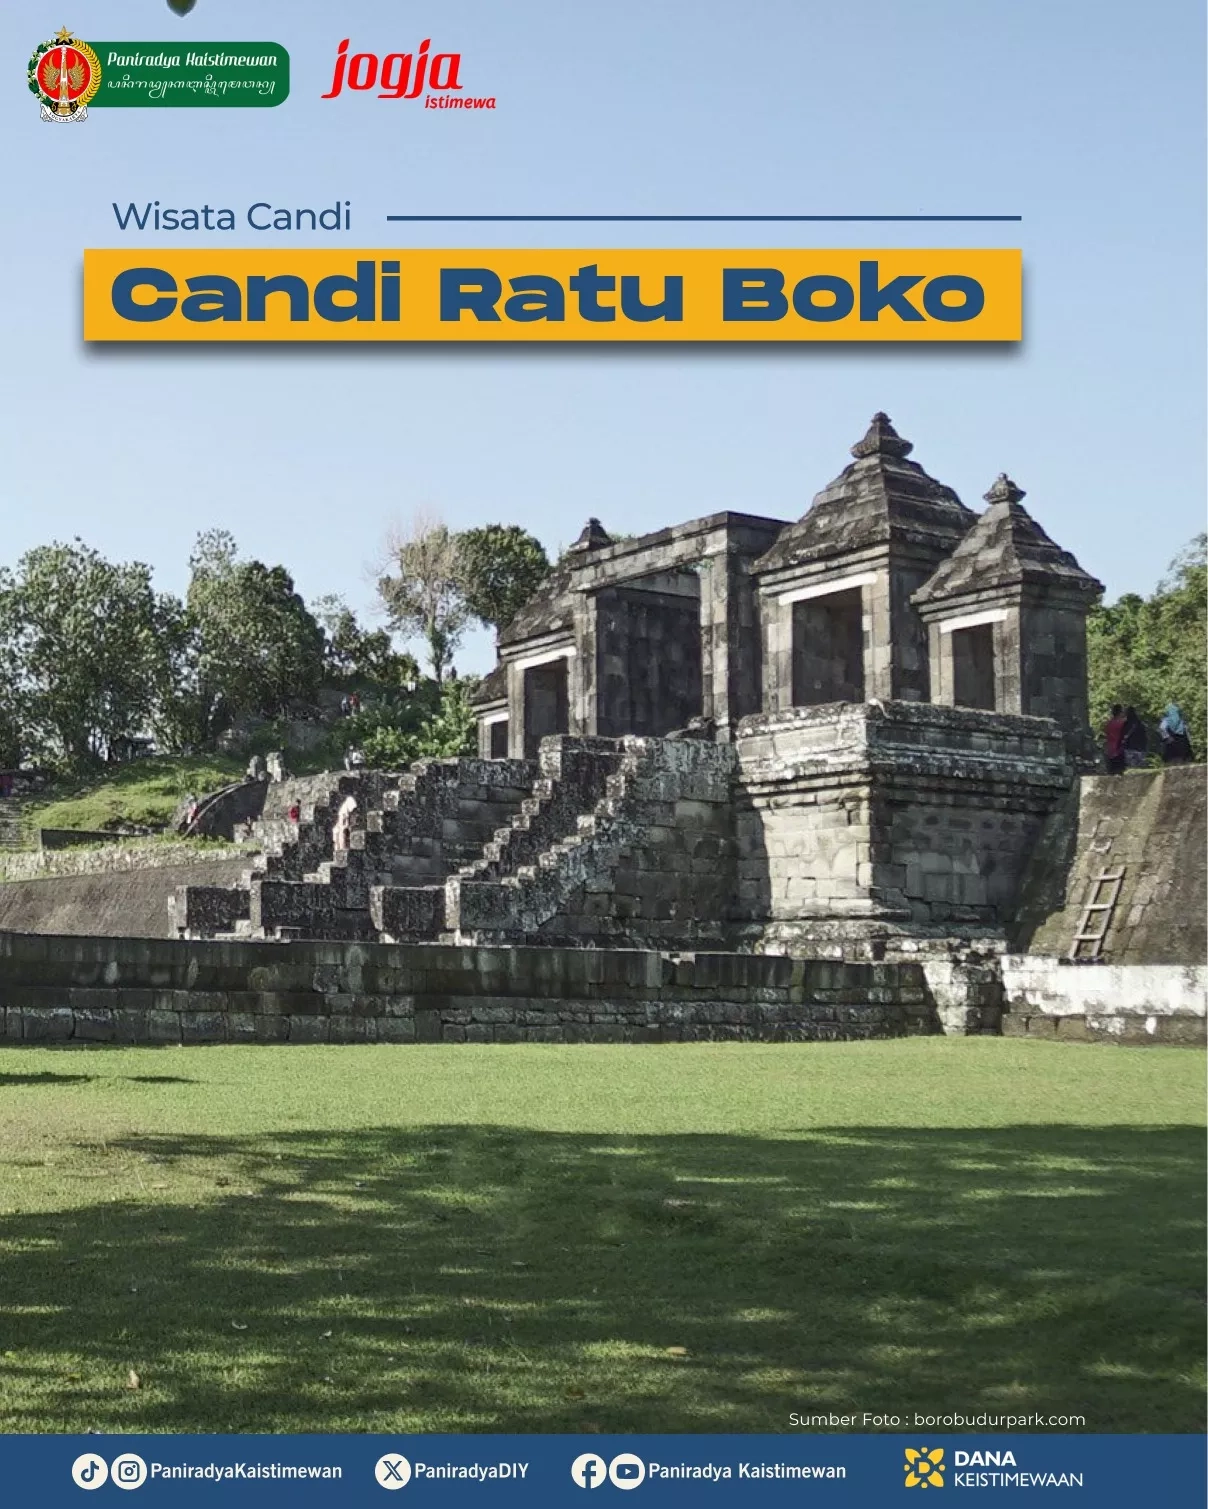 Wisata Candi - Candi Ratu Boko